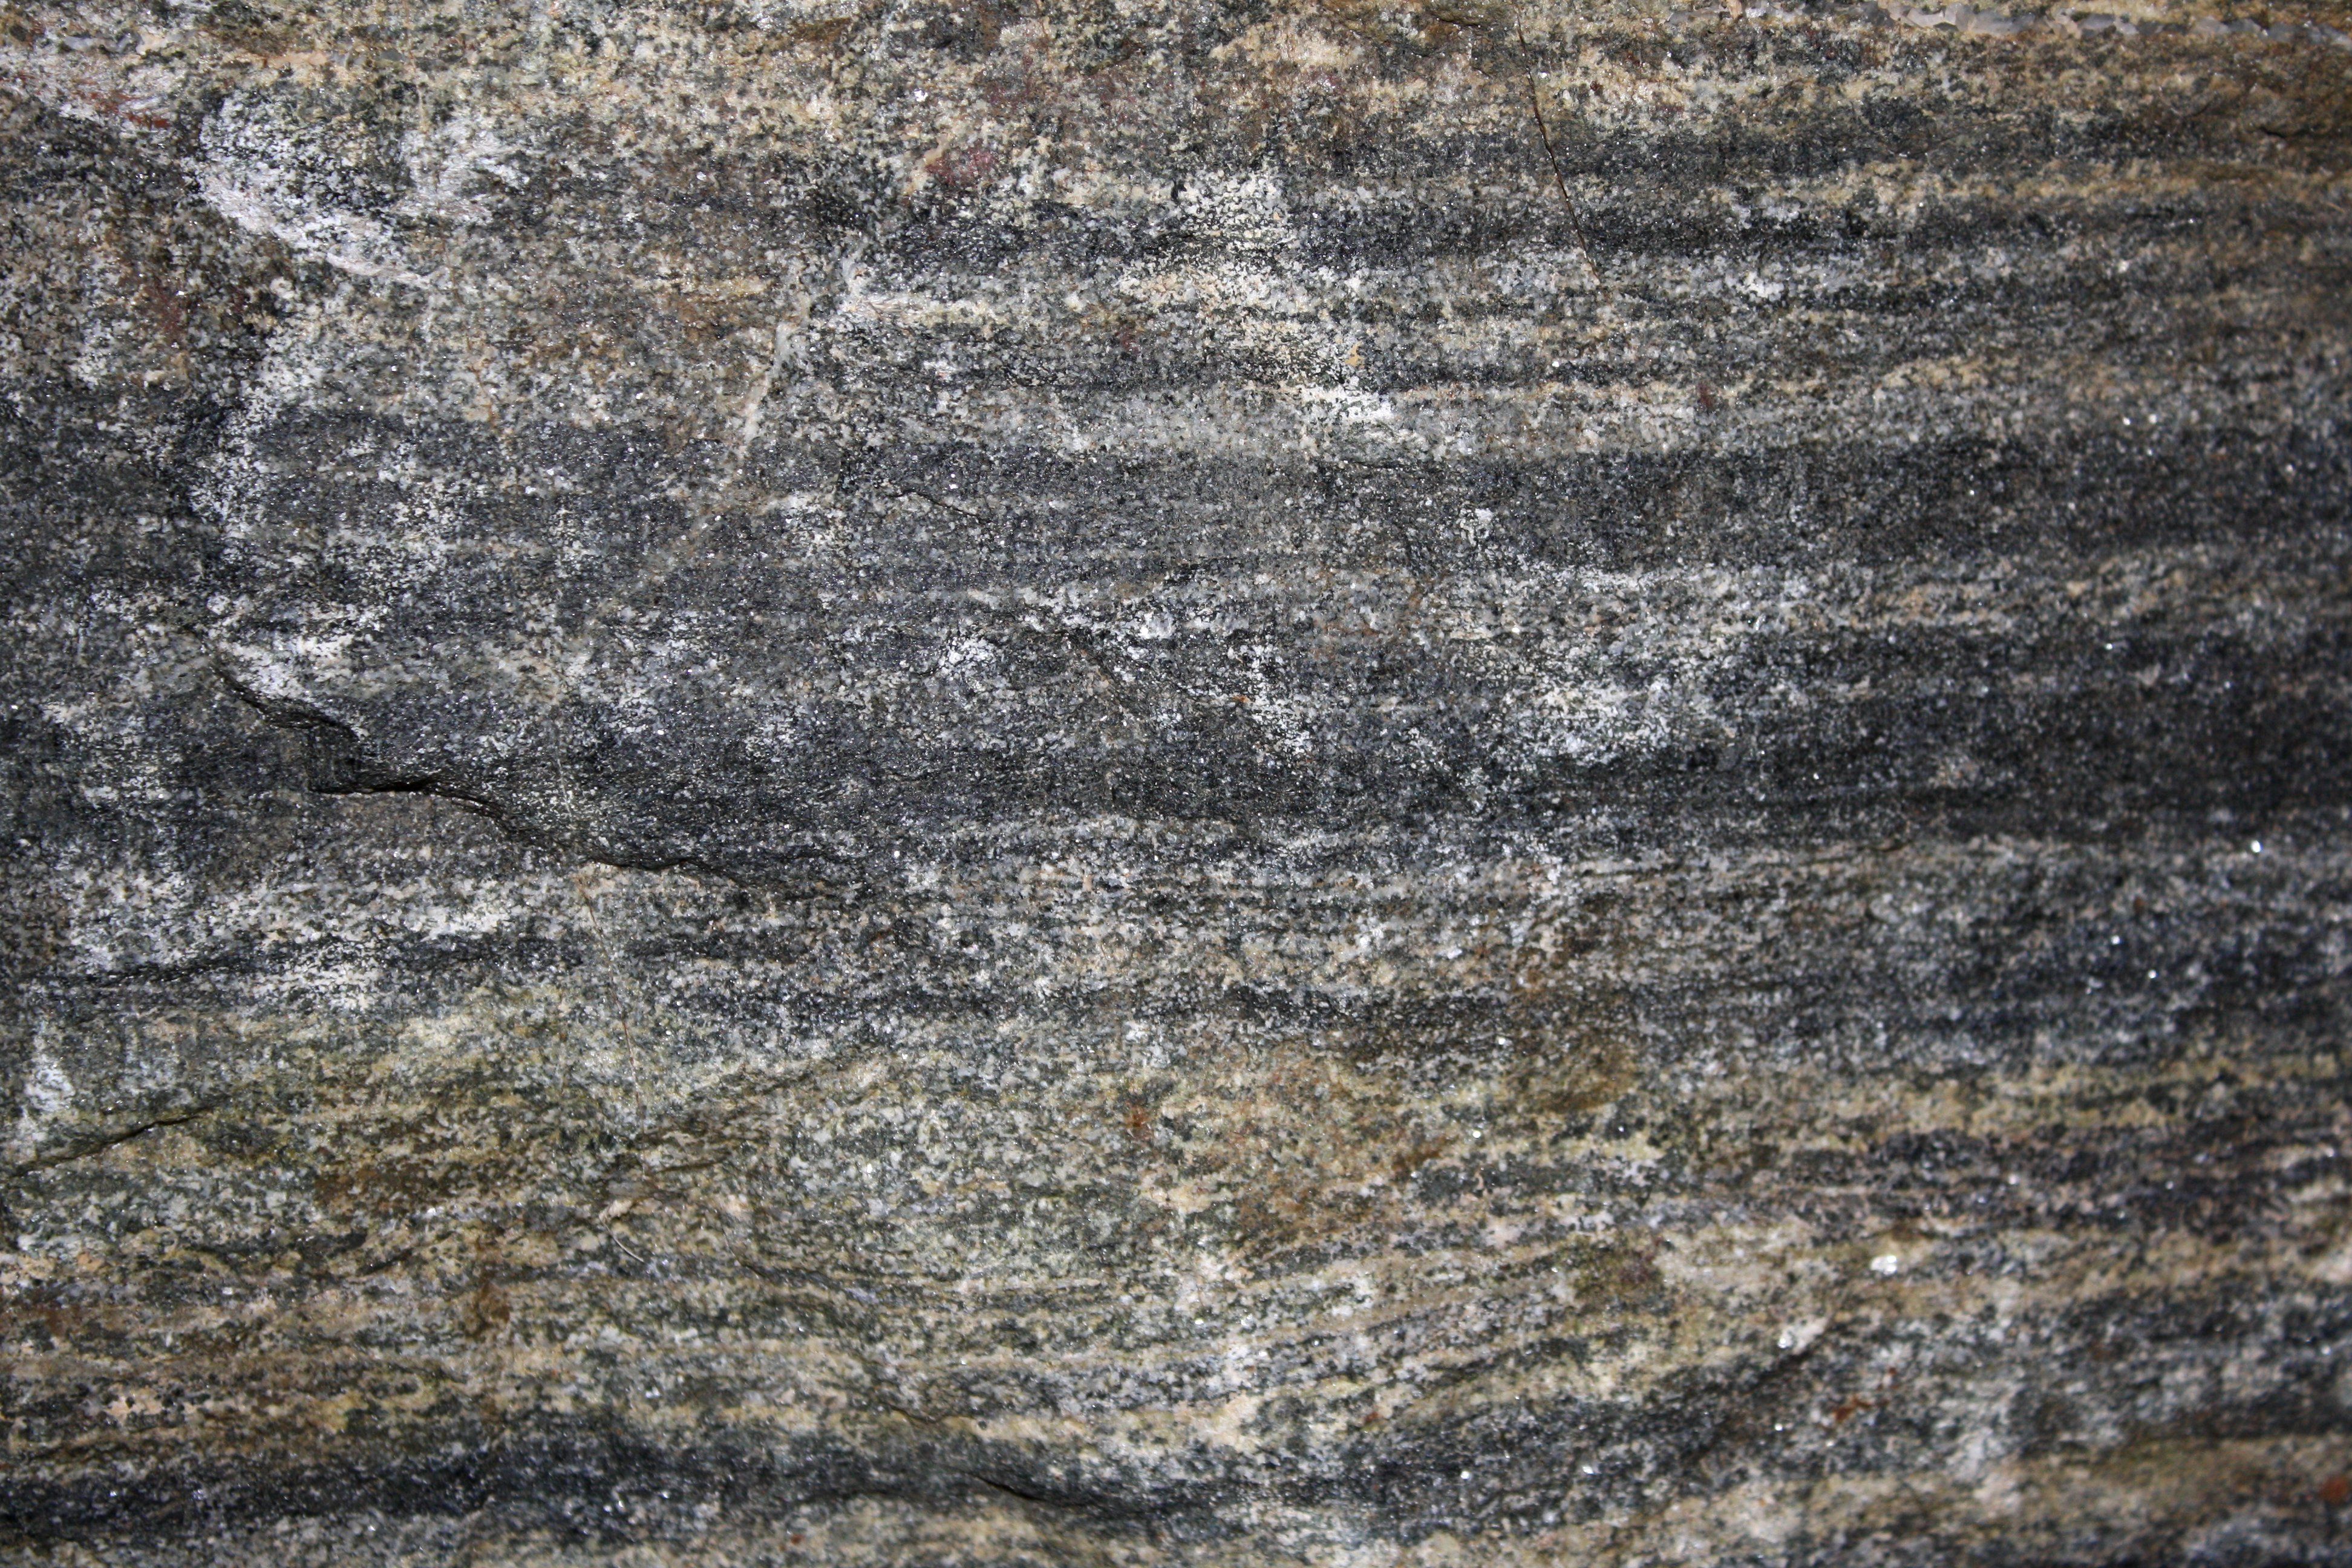 Banded Biotite Mica Schist Rock Texture Picture. Free Photograph. Photo Public Domain